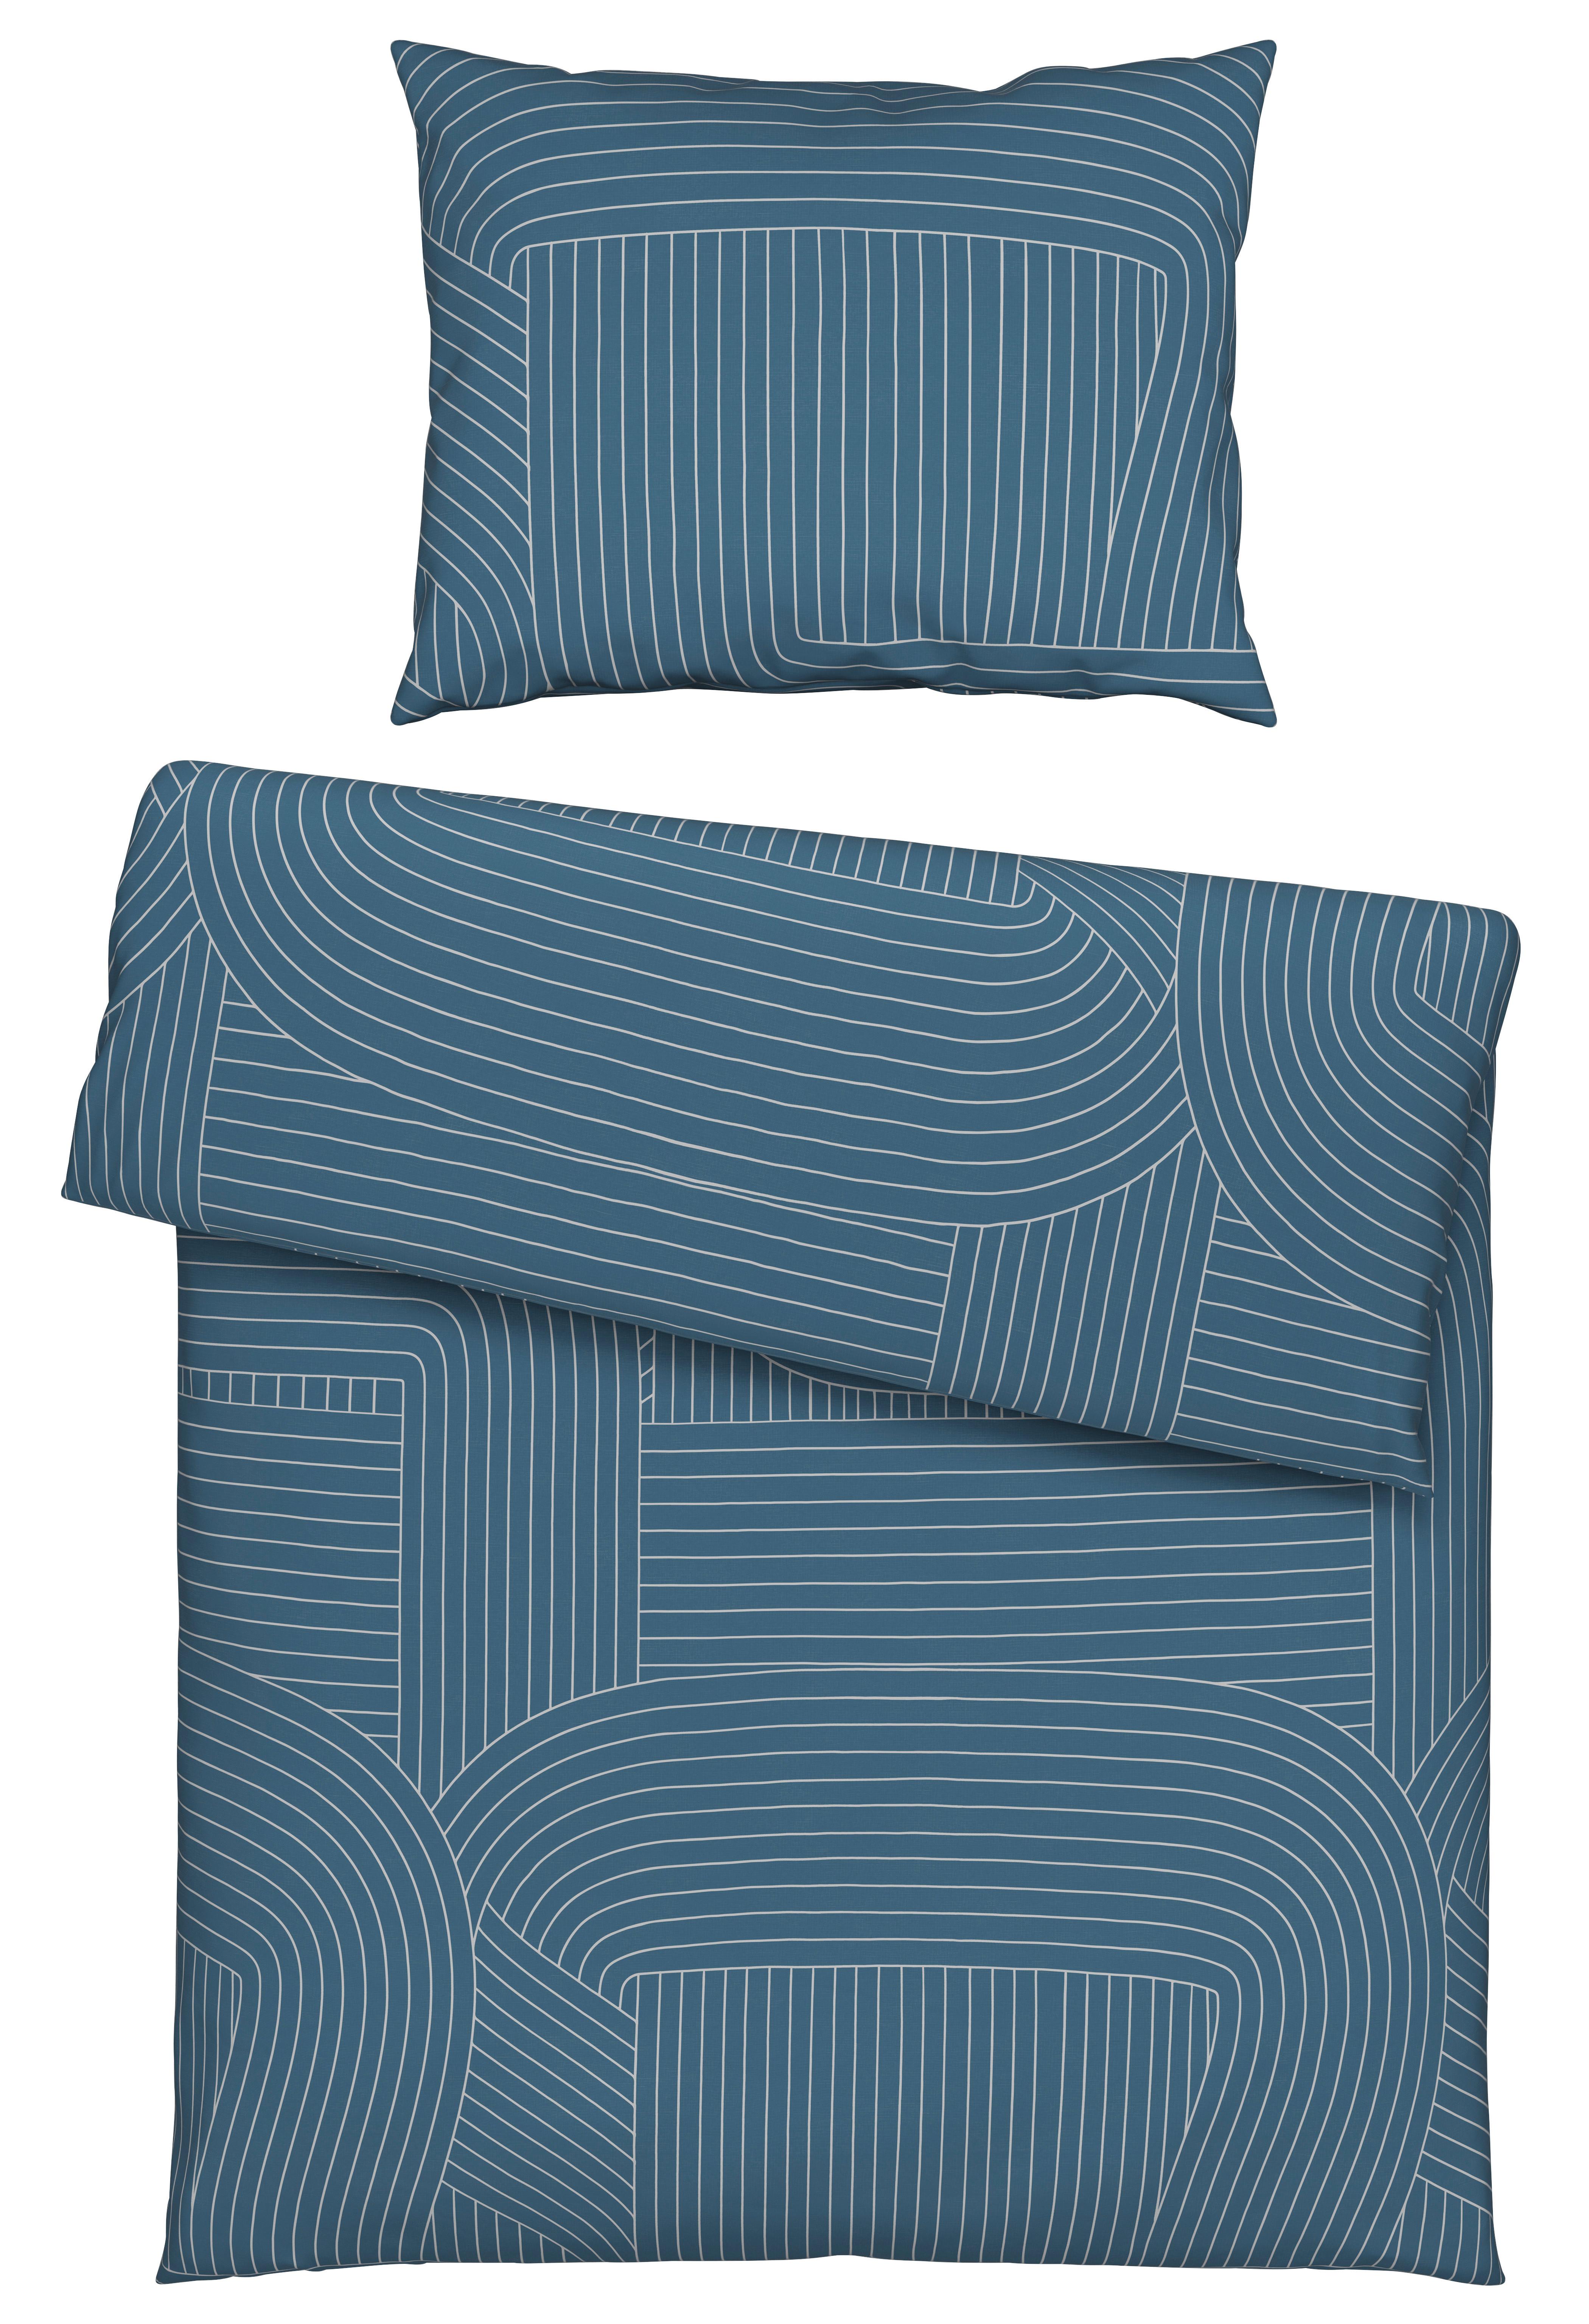 Posteljnina Scribble - modra, Moderno, tekstil (140/200cm) - Modern Living